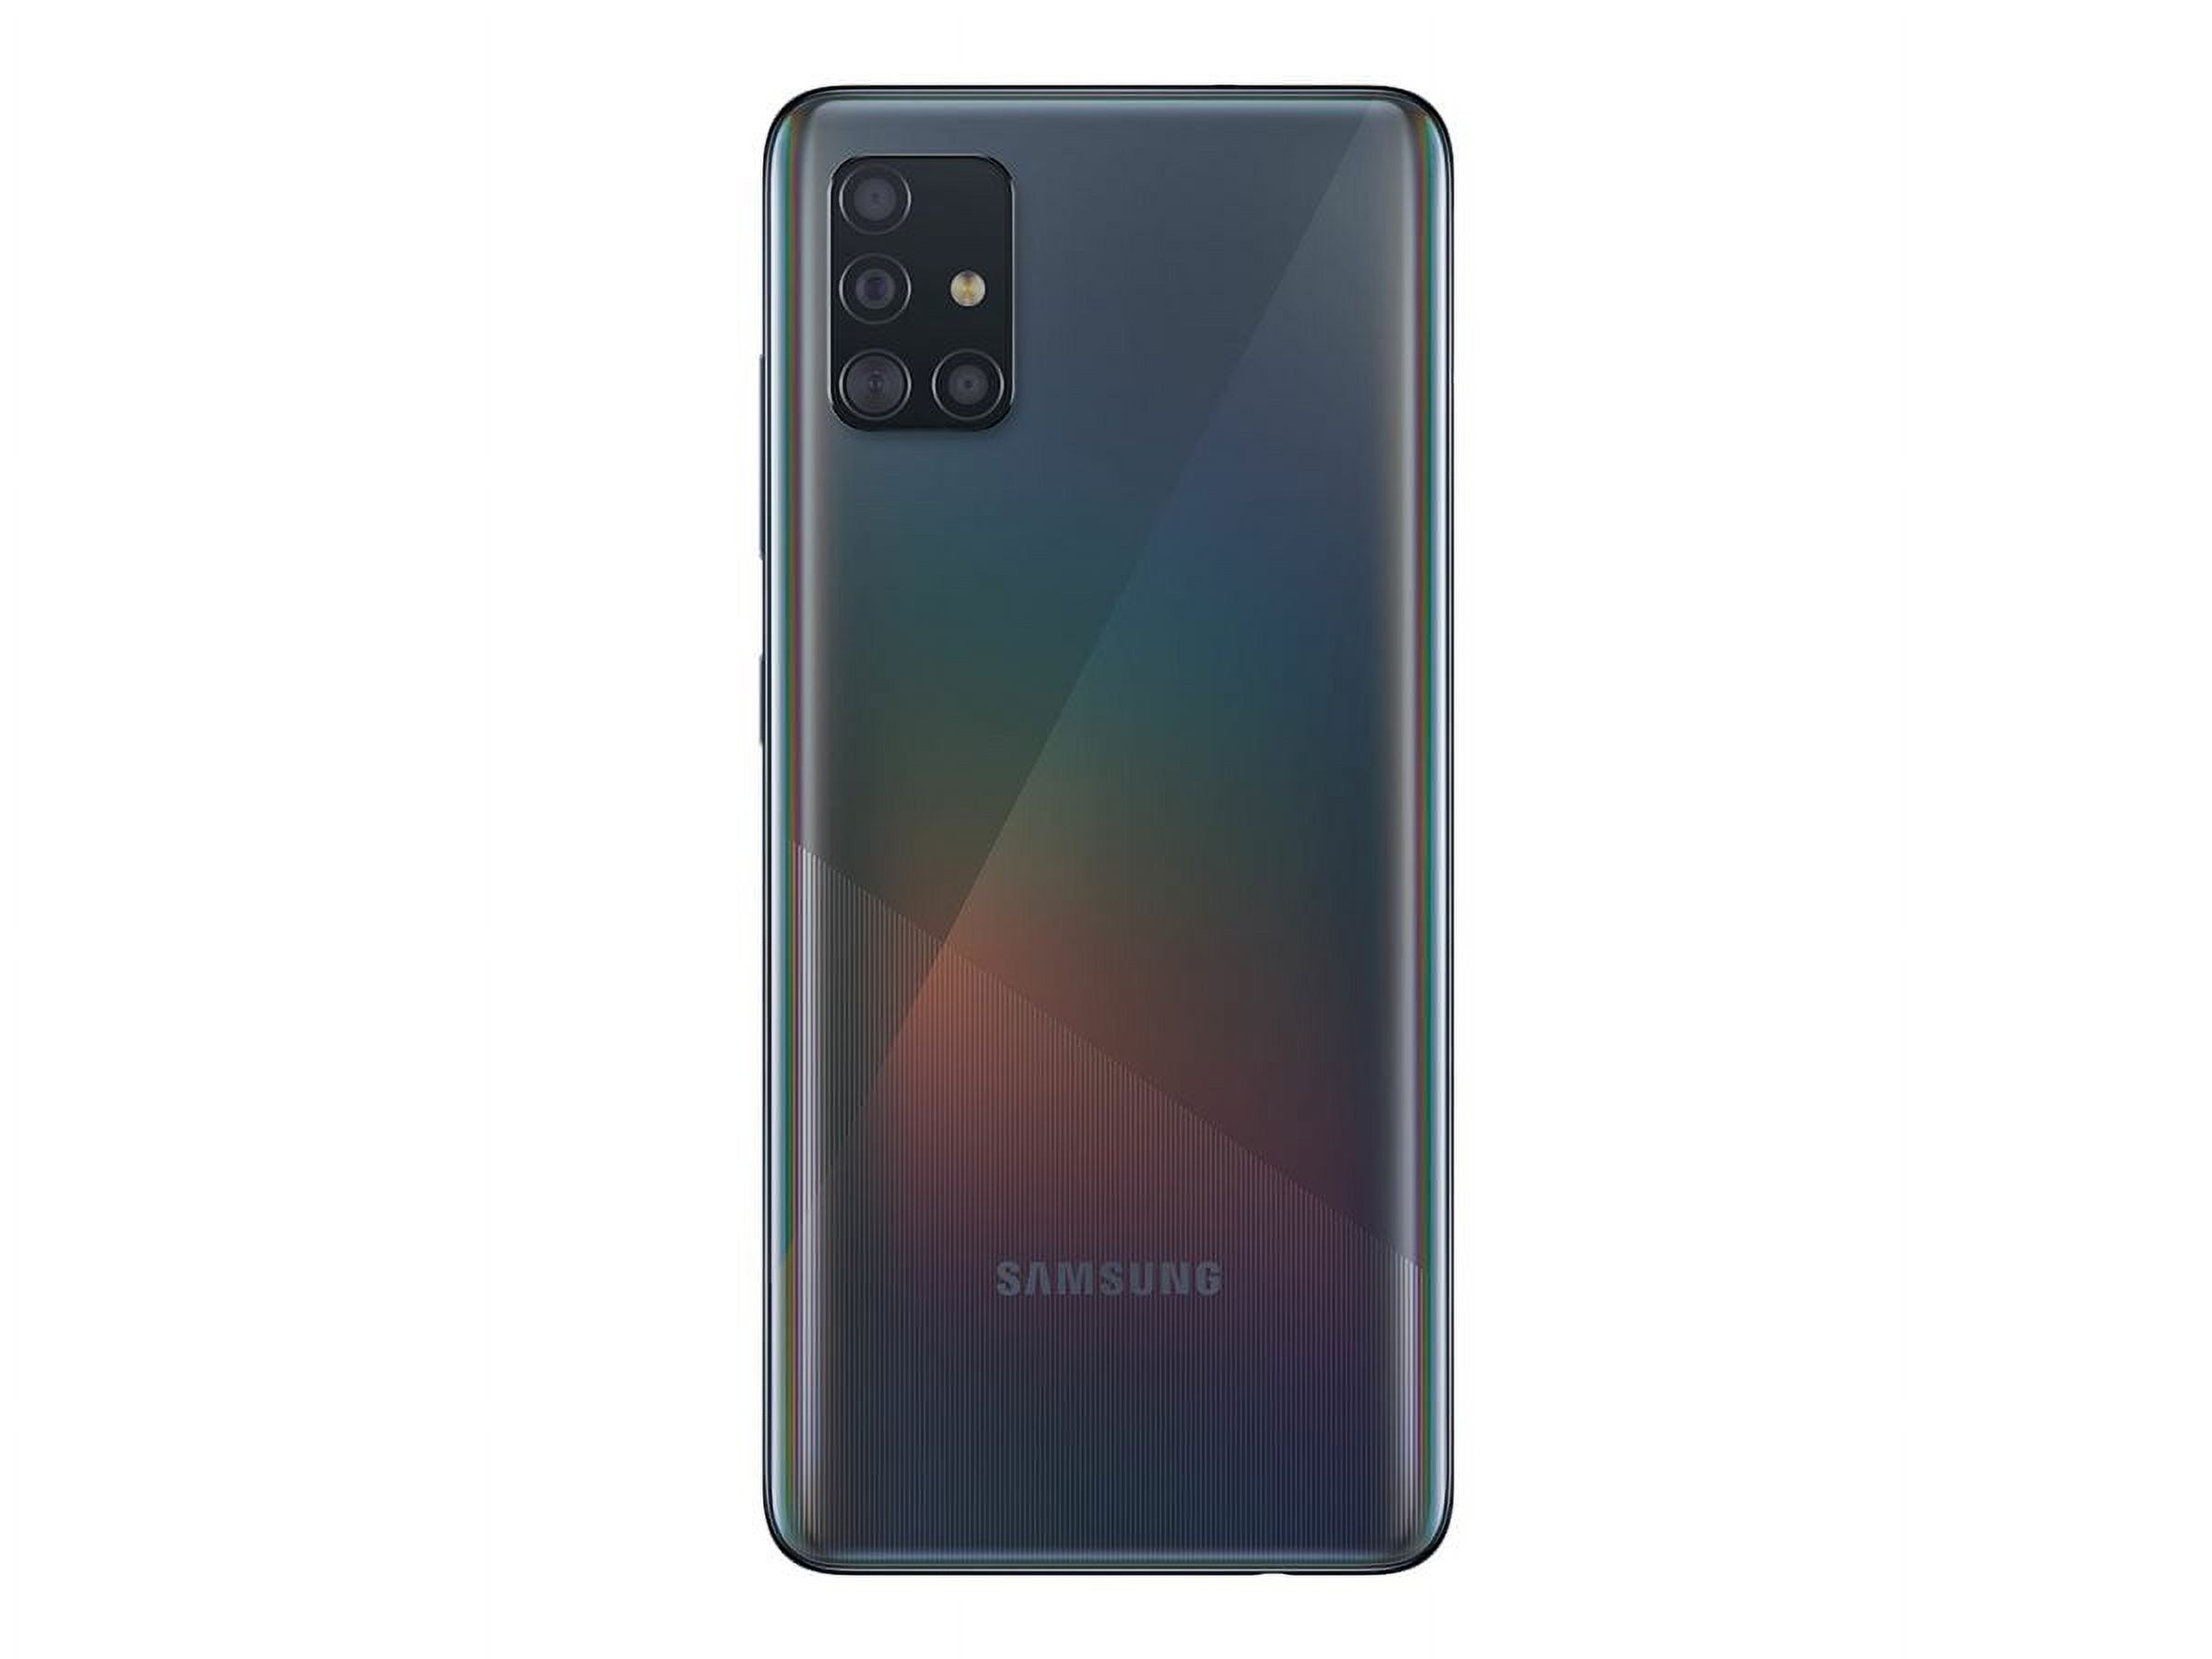 Samsung Galaxy A51 - Smartphone - 4G LTE - 128 GB - microSD slot - 6.5" - 2400 x 1080 pixels - Super AMOLED - RAM 4 GB (32 MP front camera) - 4x rear cameras - Android - Sprint - Prism crush black - image 4 of 7